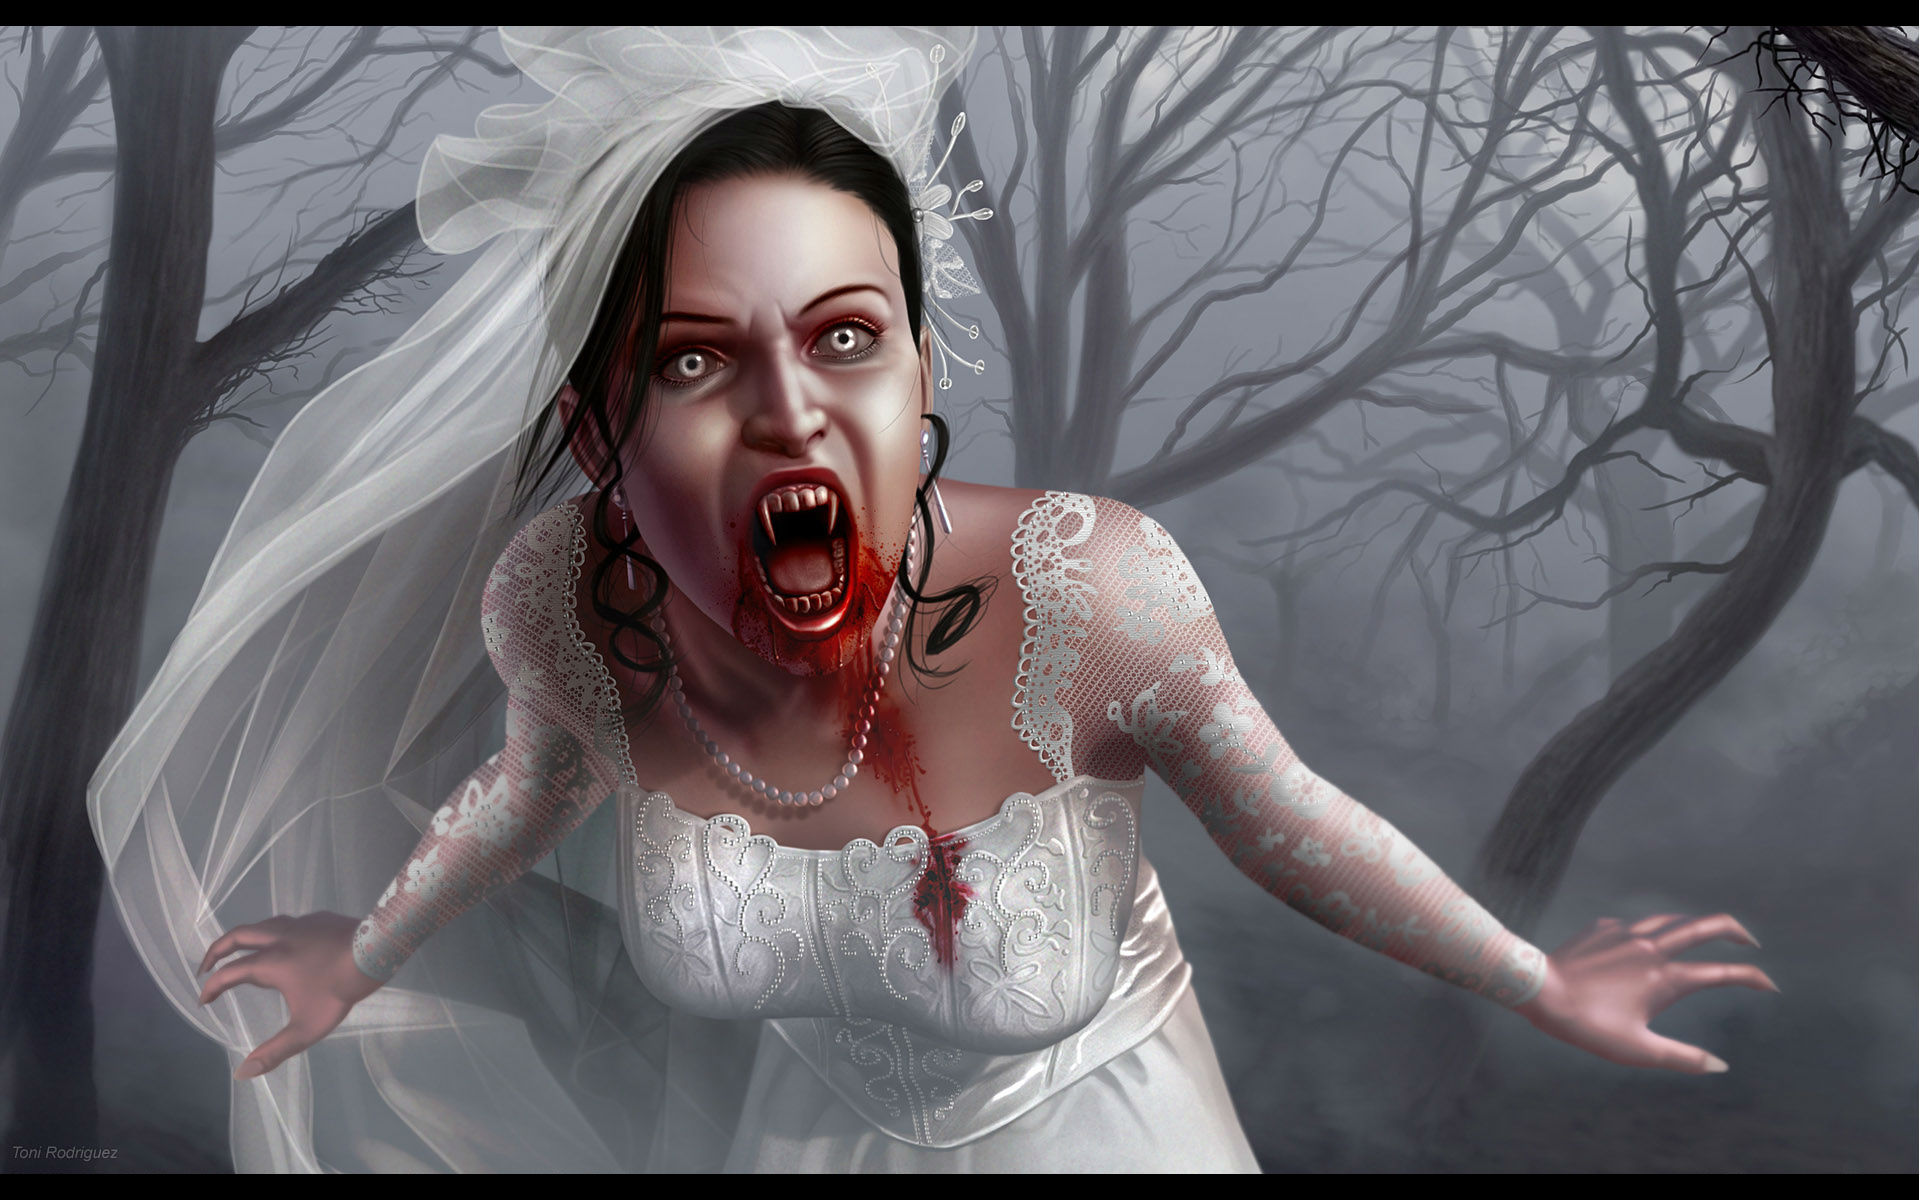 blood, horror, vampire, spooky, bride, halloween, creepy, scary, dark